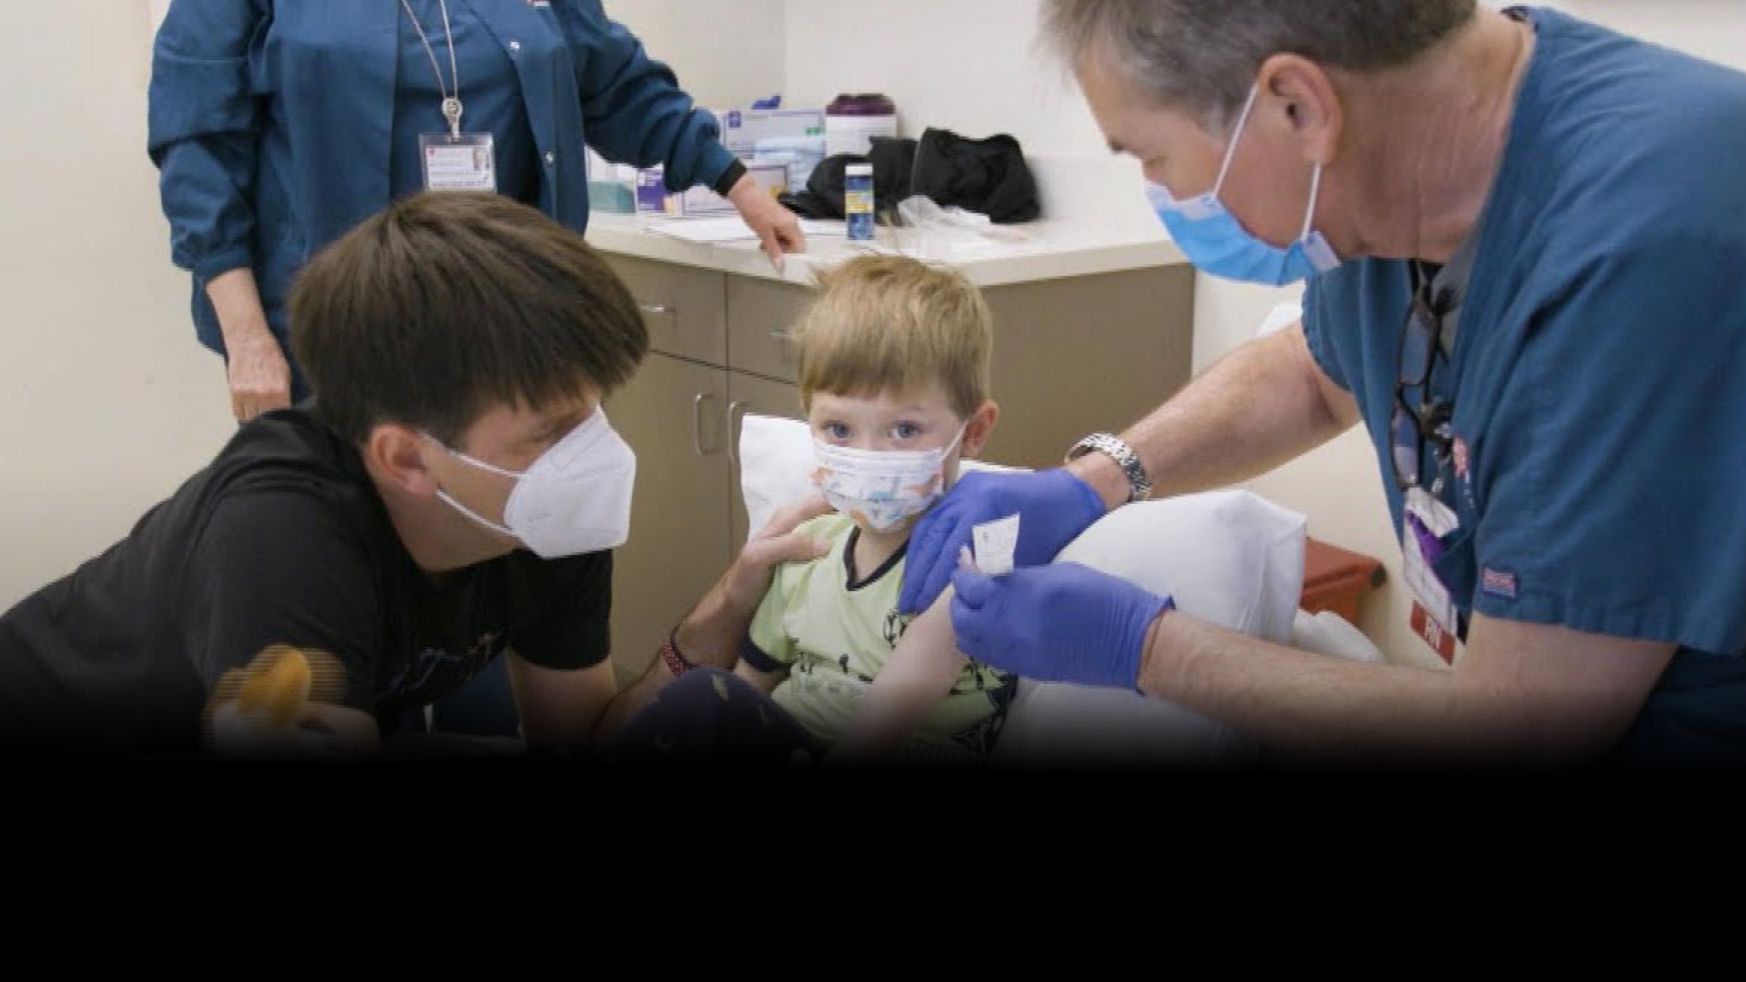 Child getting vaccine